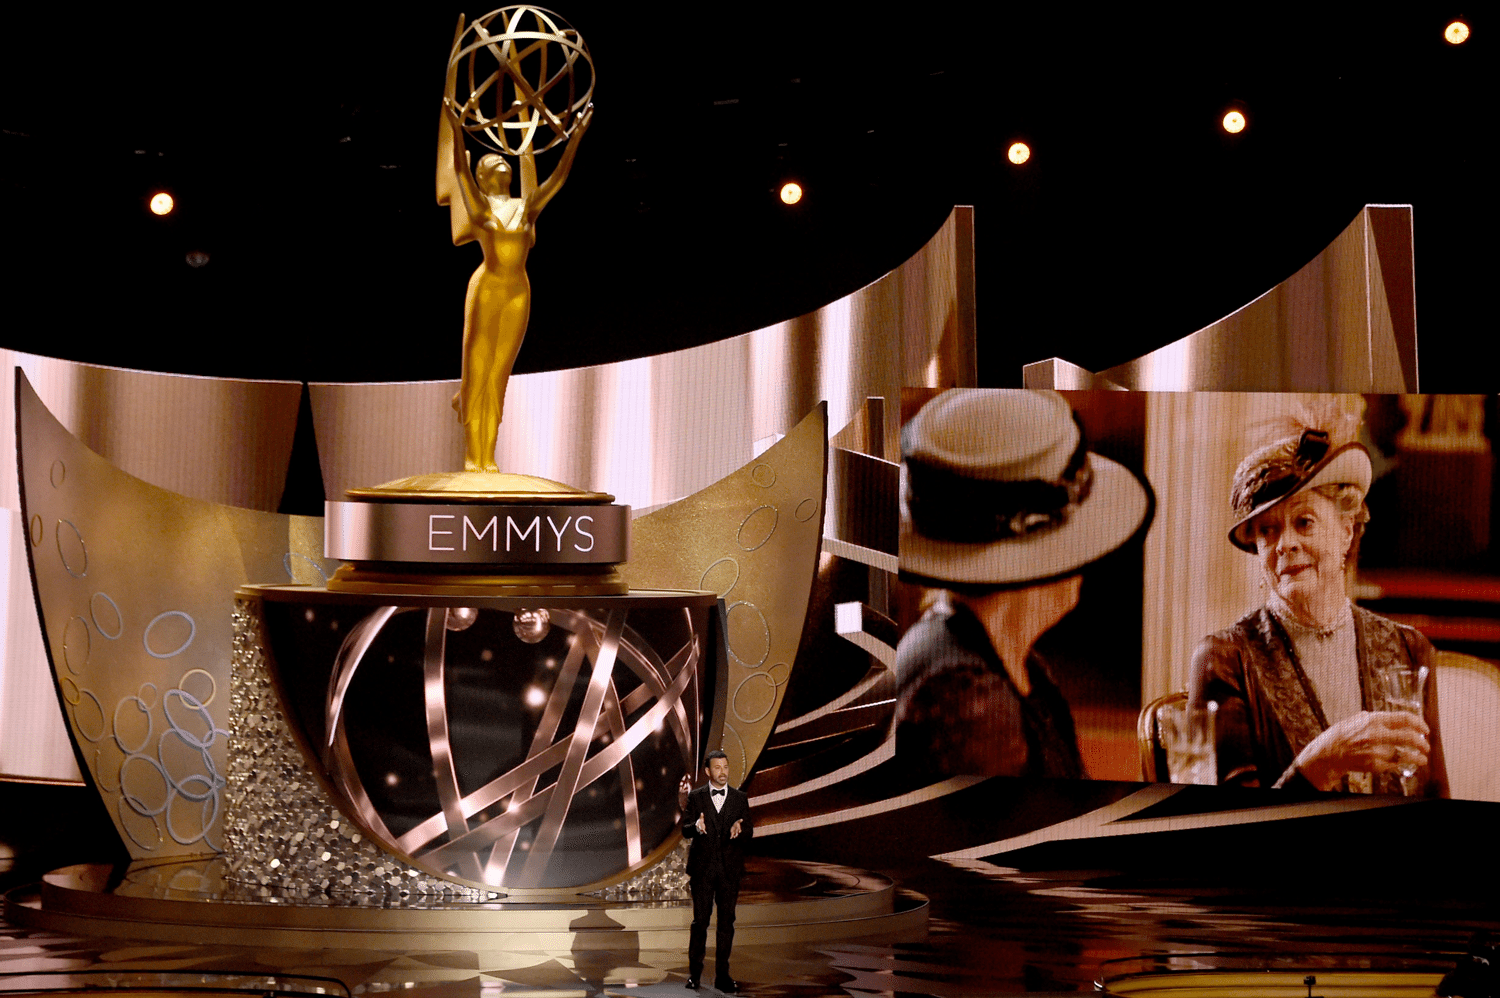 Emmy Awards Stage 2016 - VER LED Equipment